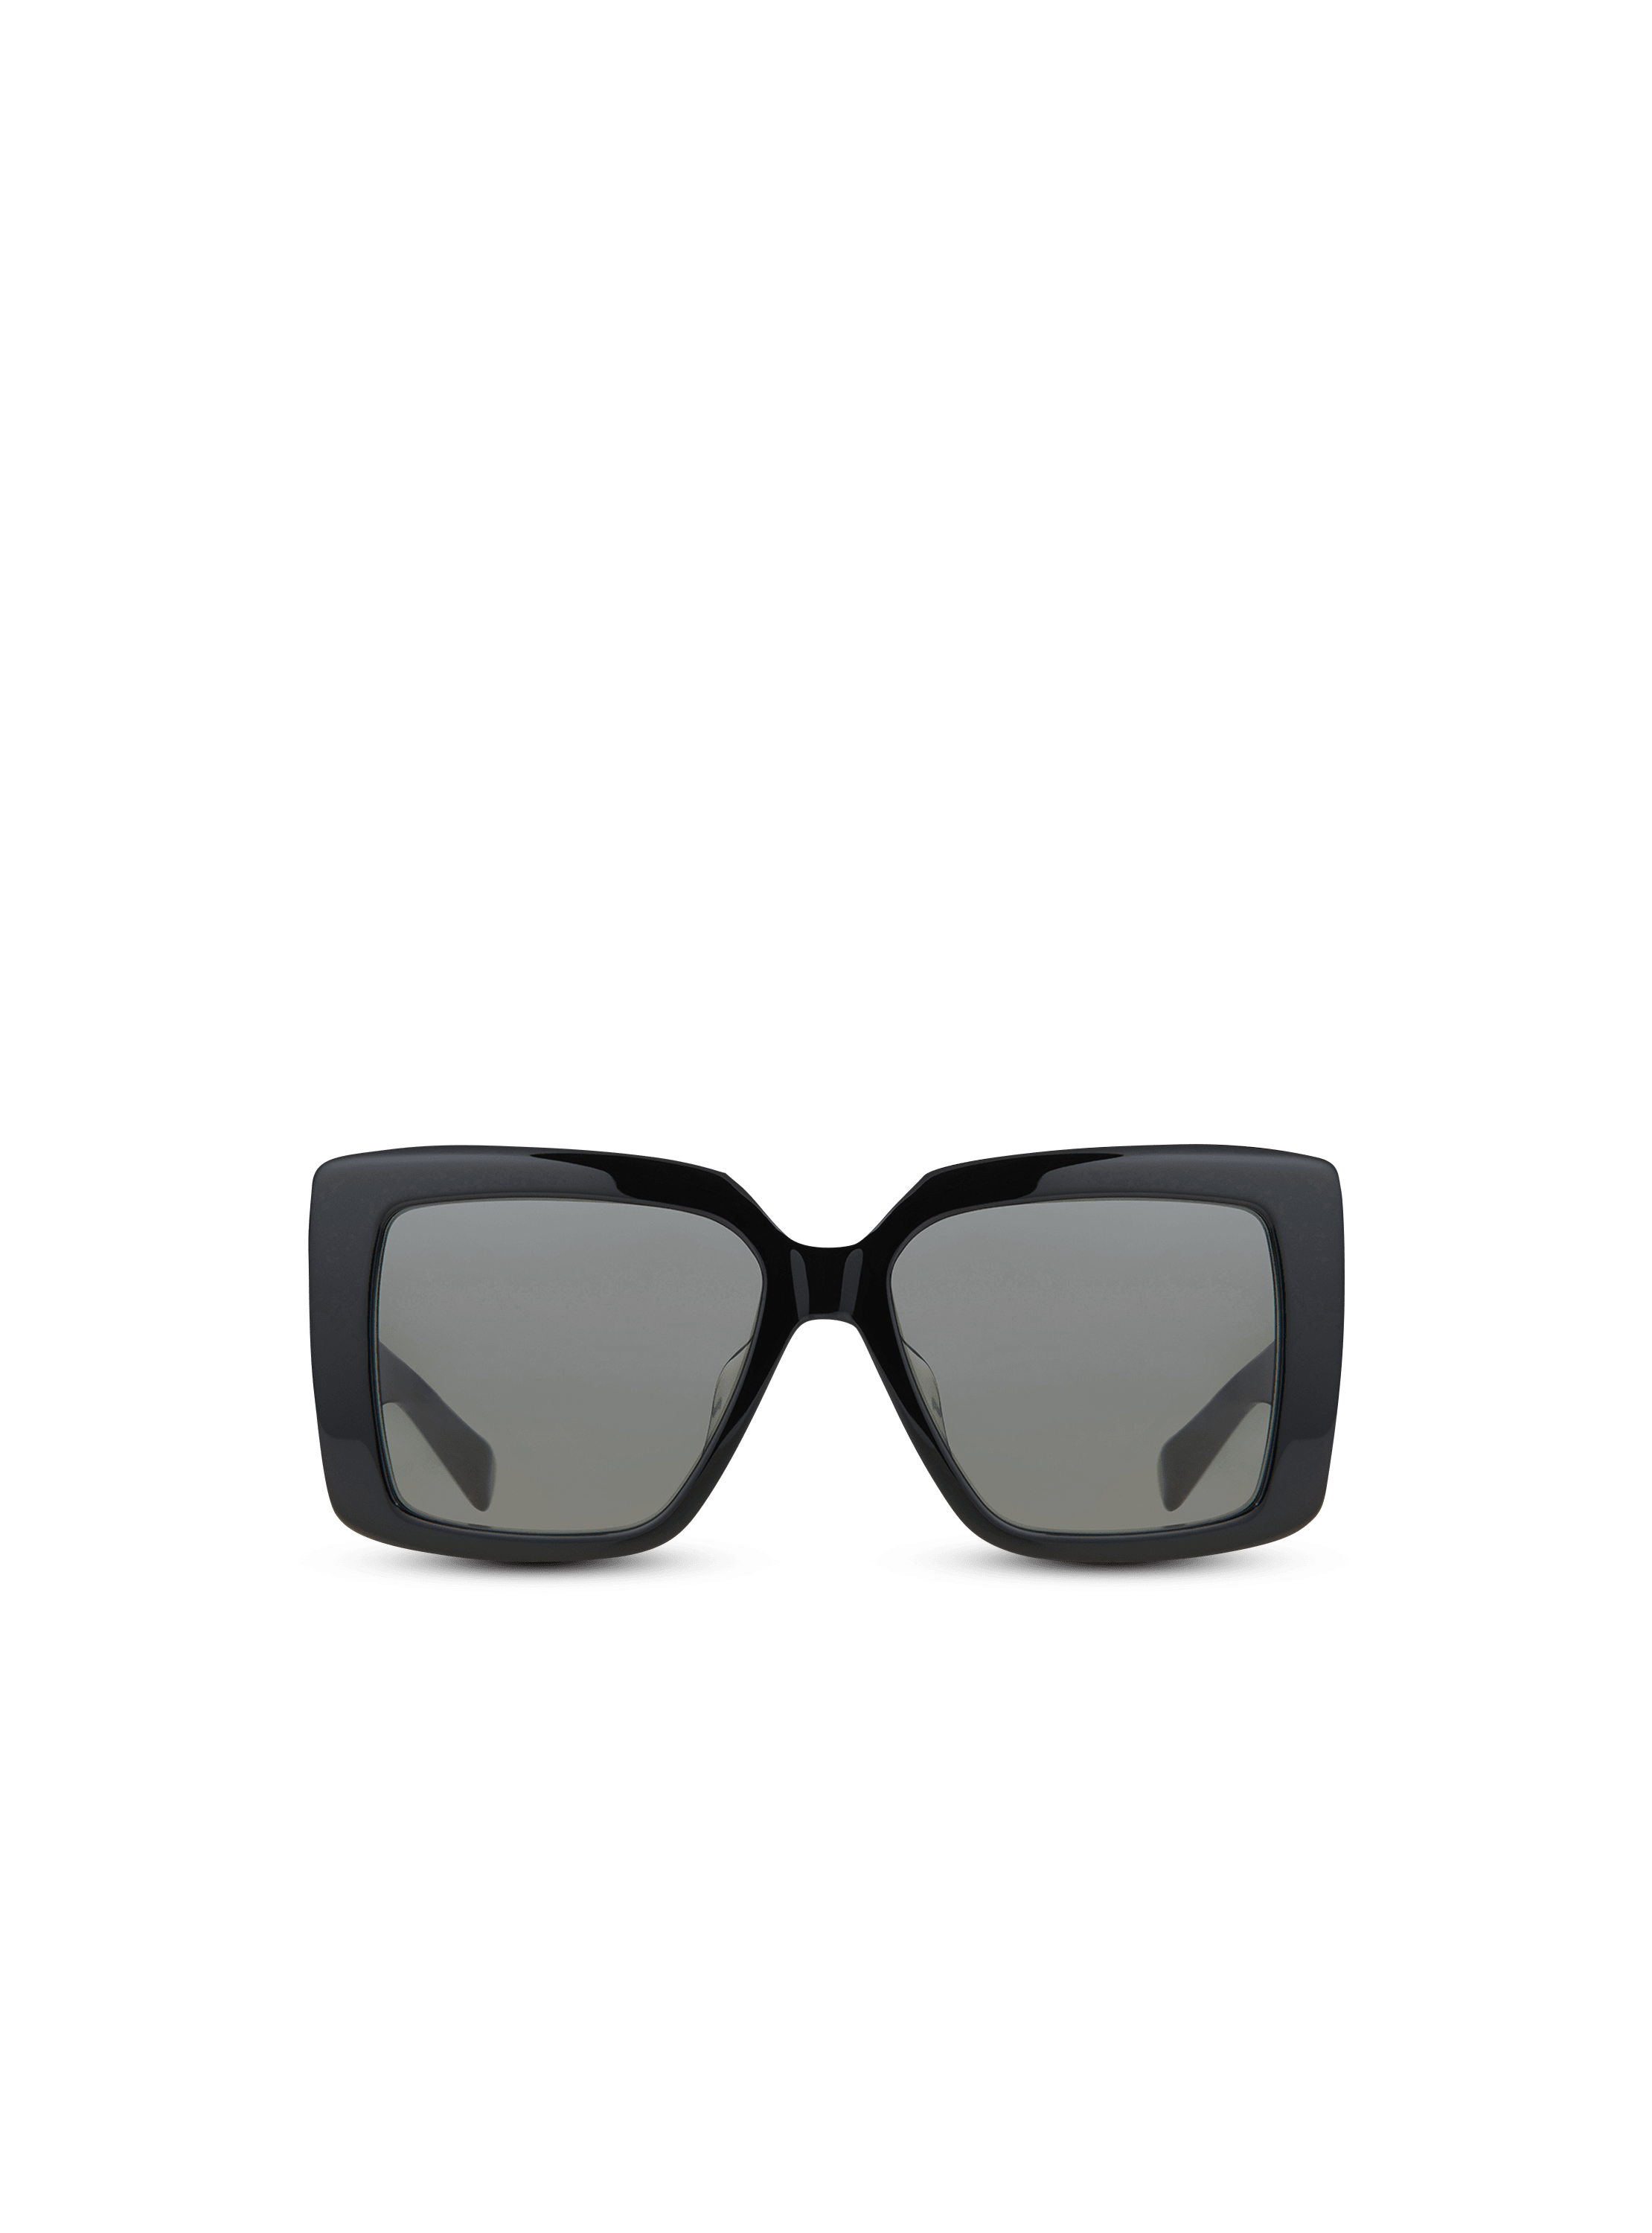 Tortoiseshell effect acetate La Royale sunglasses